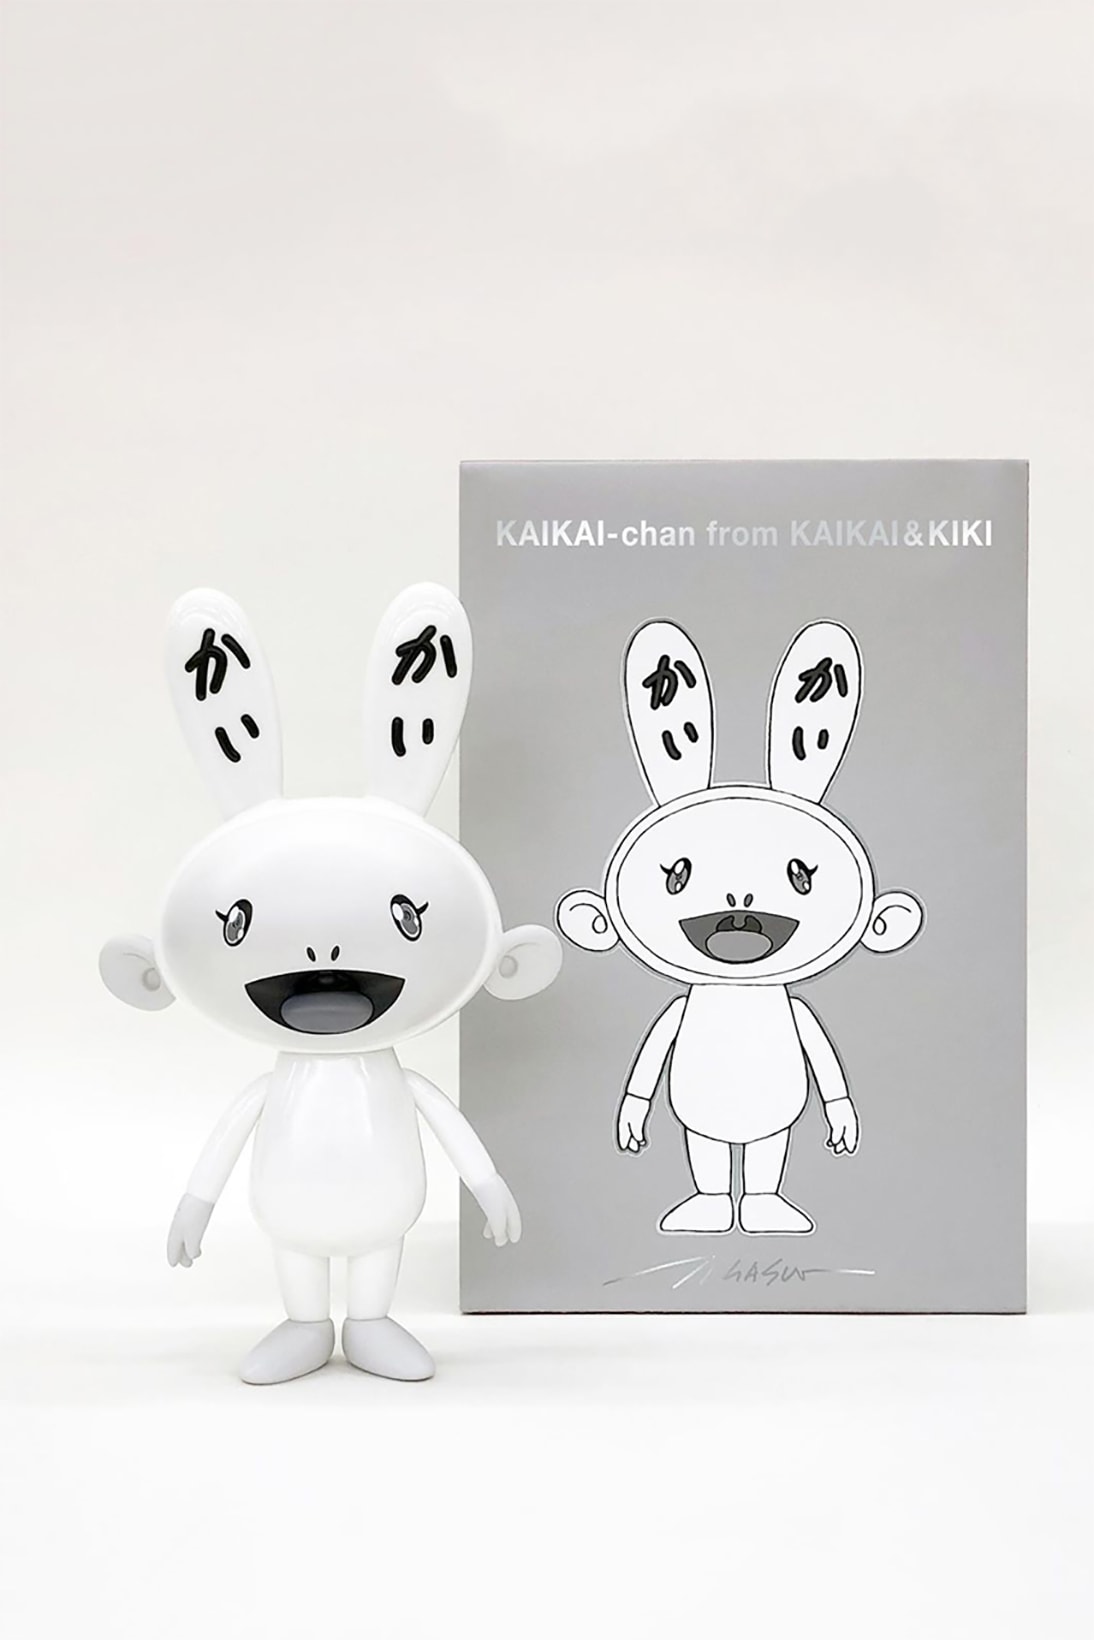 takashi murakami kaikai kiki figures black white vinyl figures art release tokyo japan artist